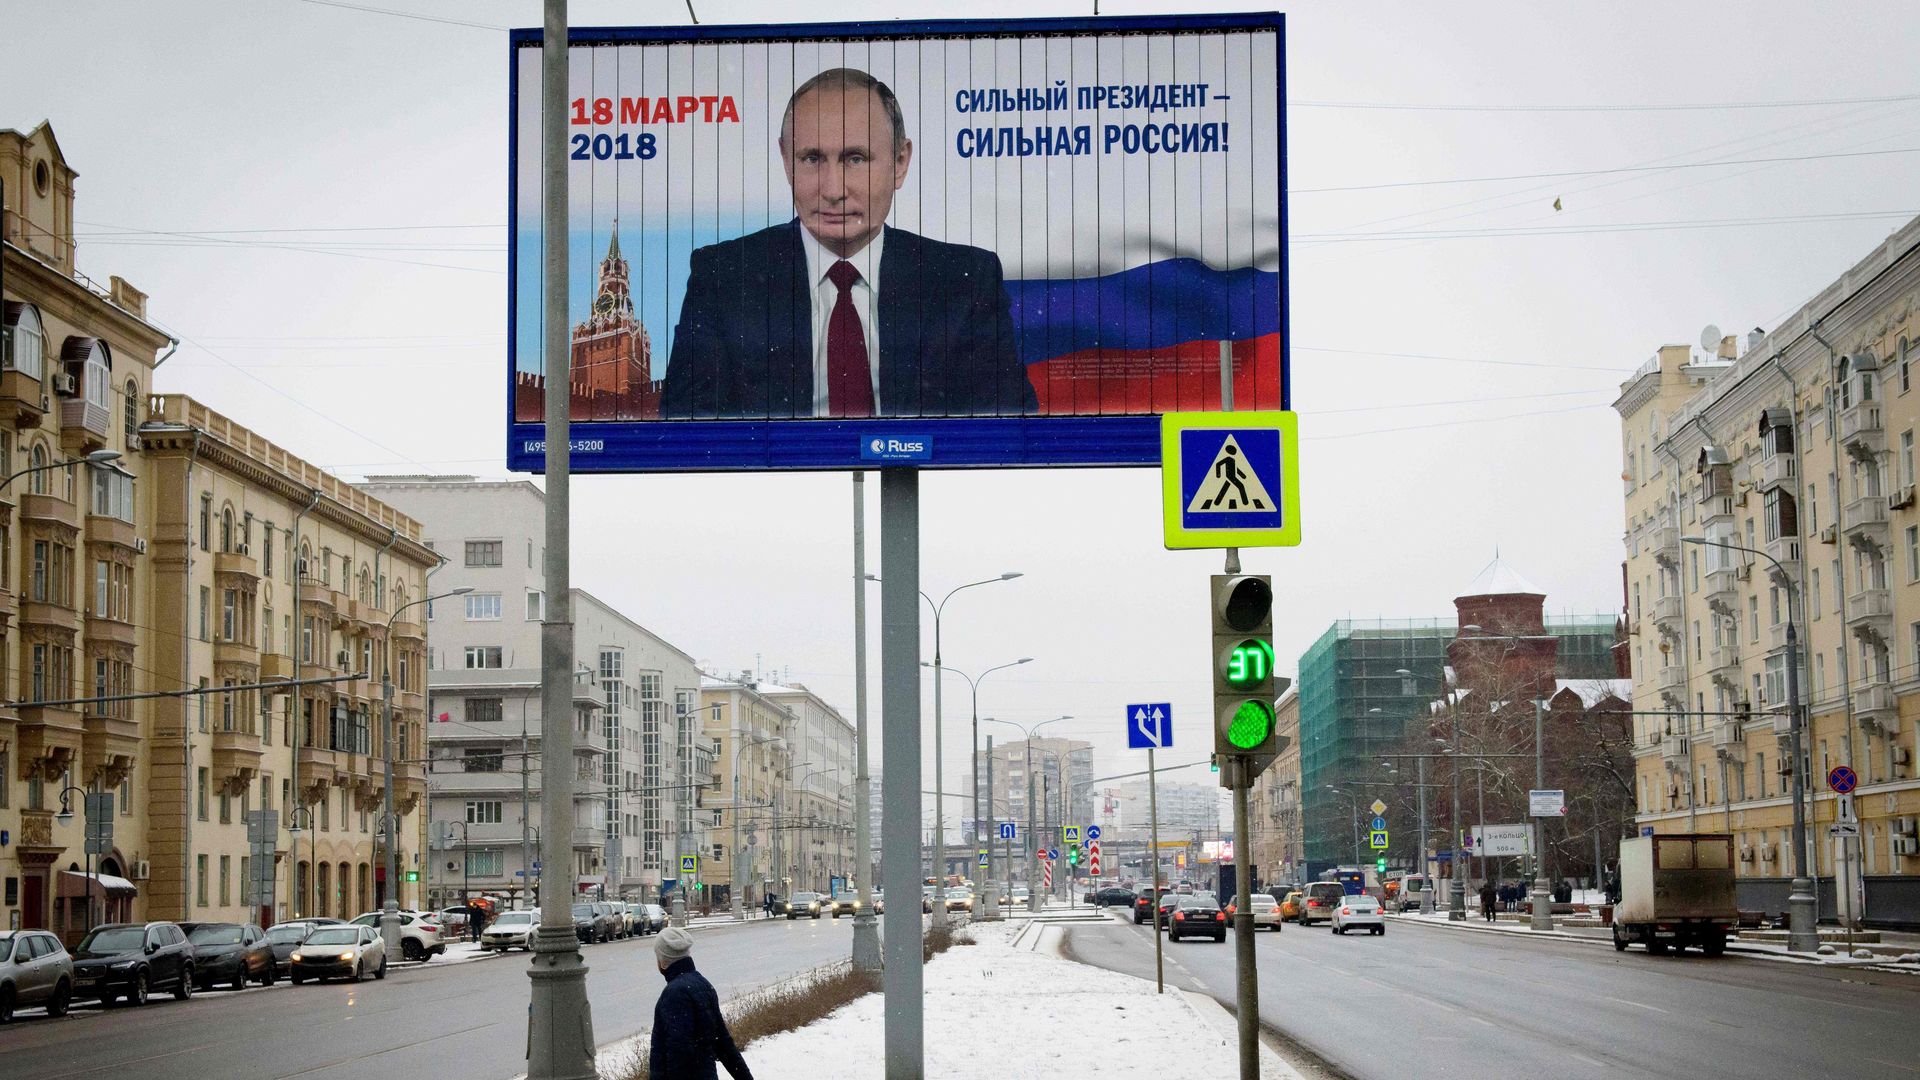 Vladimir Putin on a billboard.